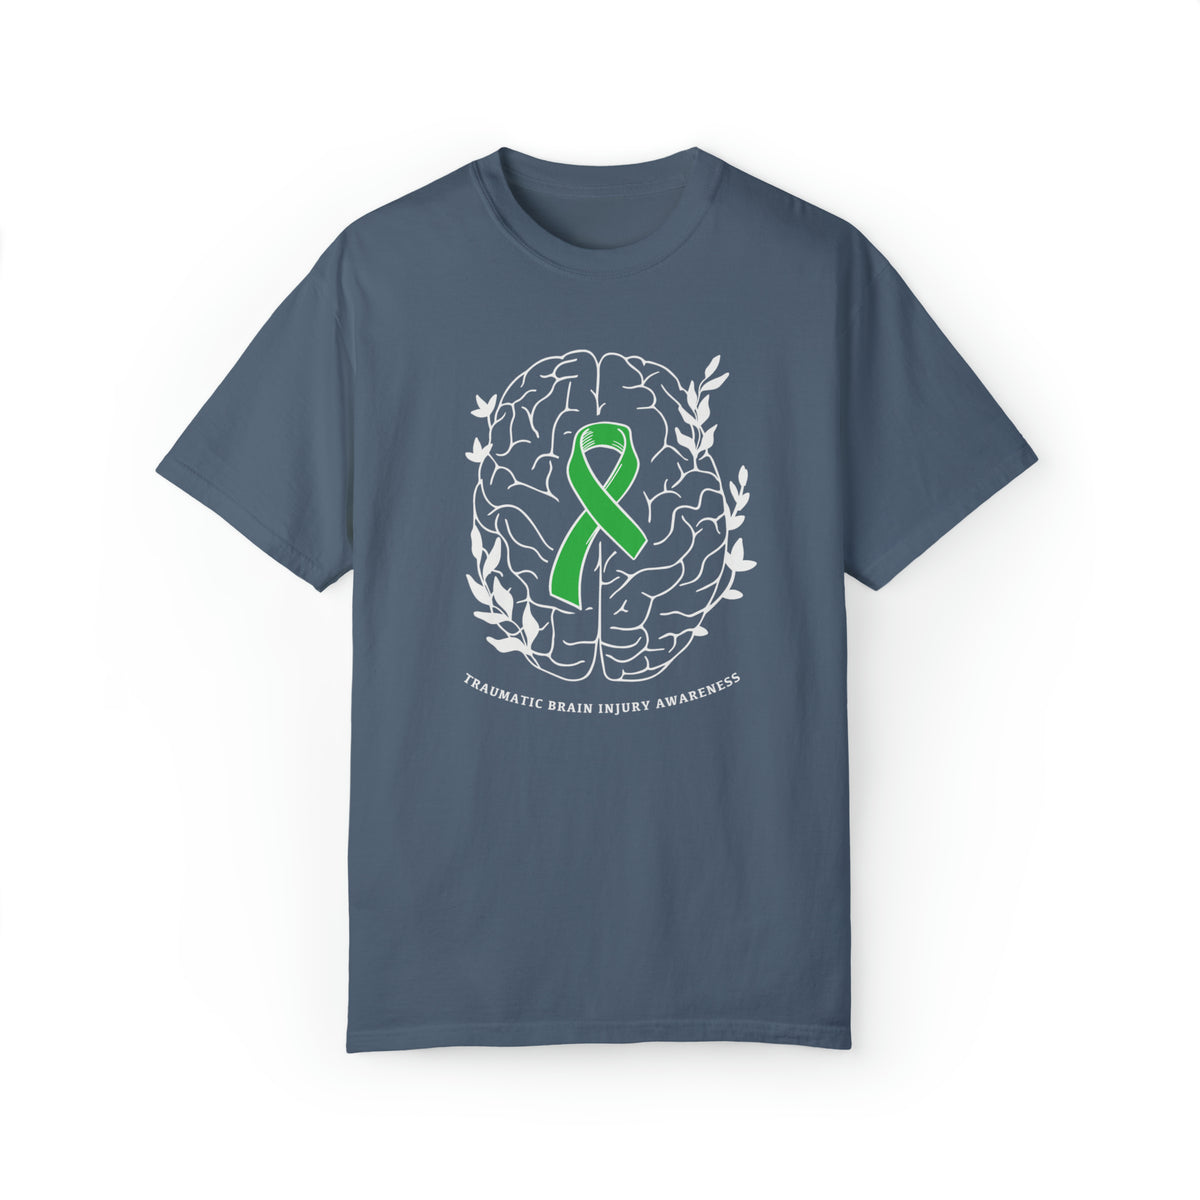 TBI Awareness Comfort Colors Unisex Garment-Dyed T-shirt